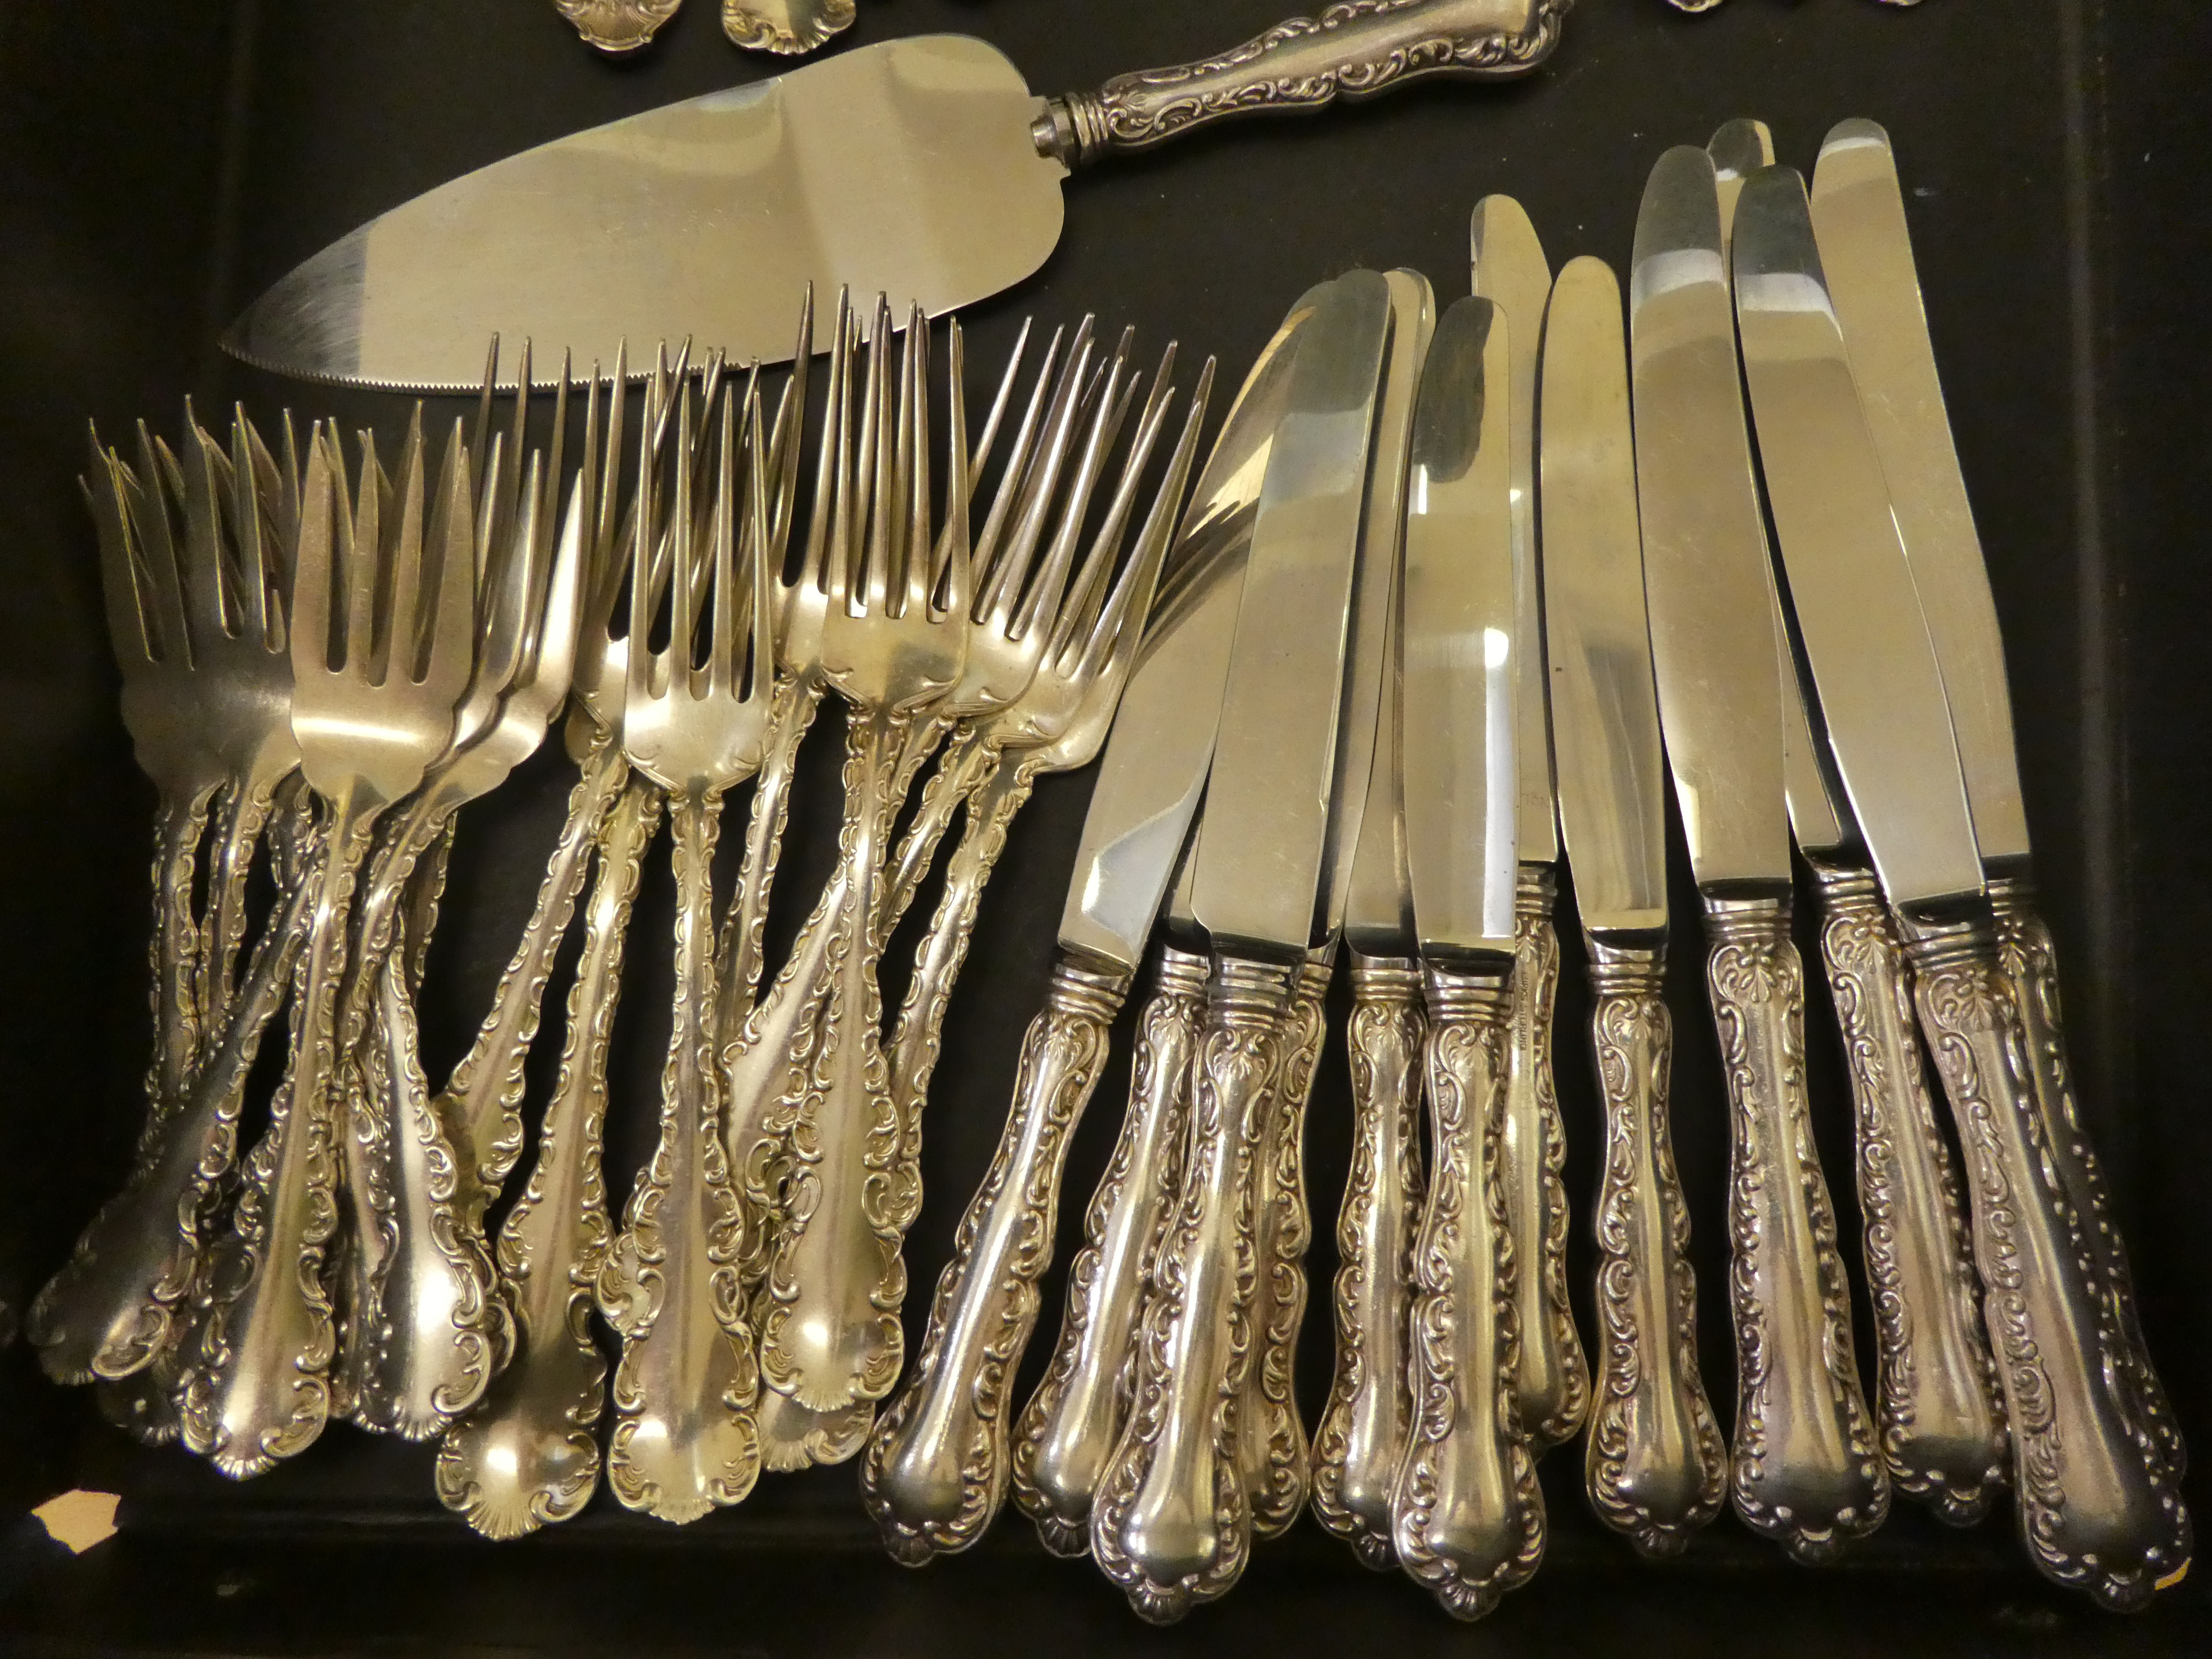 Birks Sterling silver flatware and Sterling handled knives - Image 2 of 3